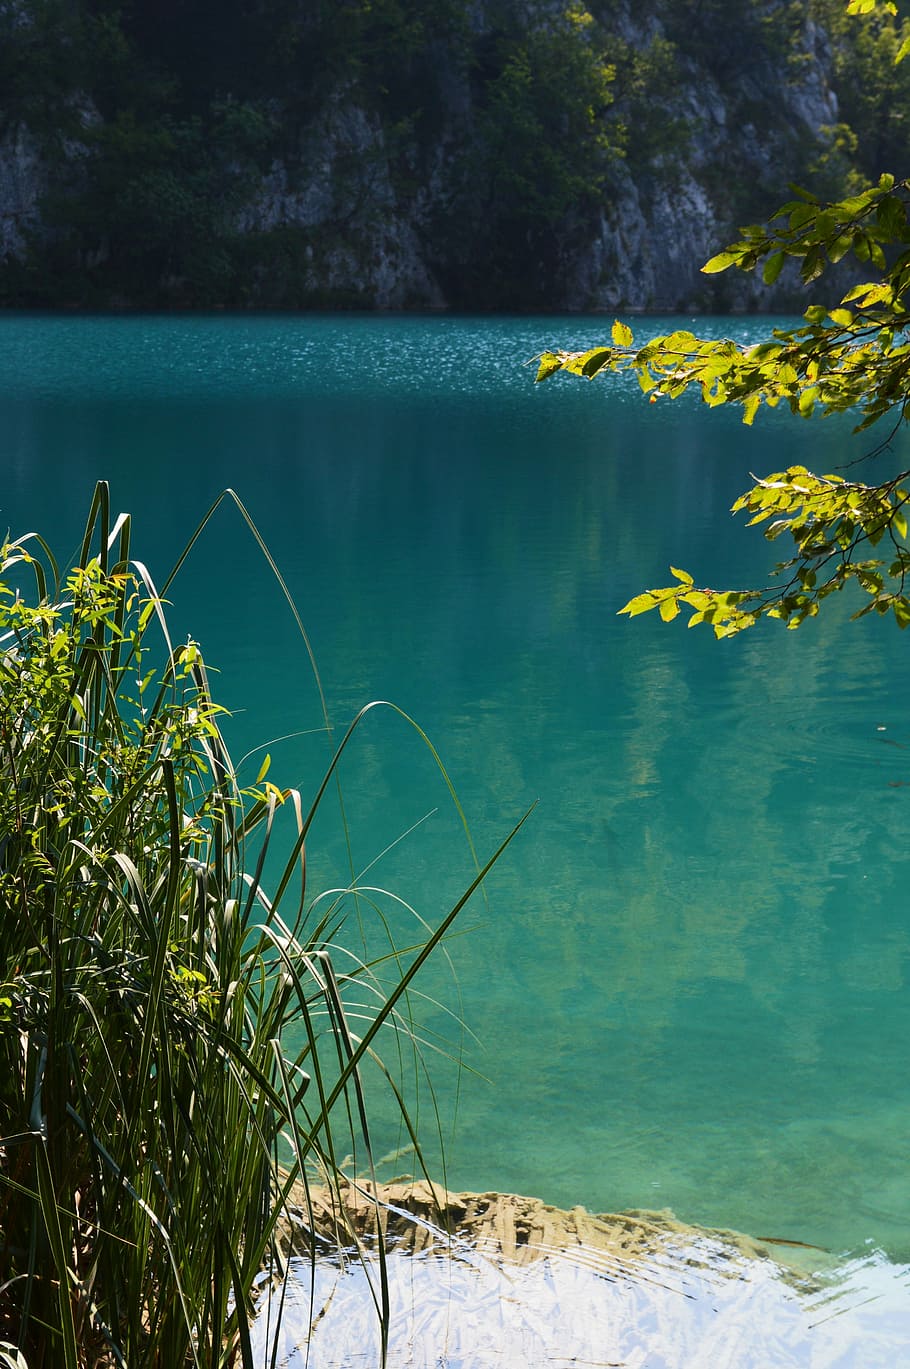 plitvice, croatia, lake, national park, reed, trees, light, summer, green, turquoise